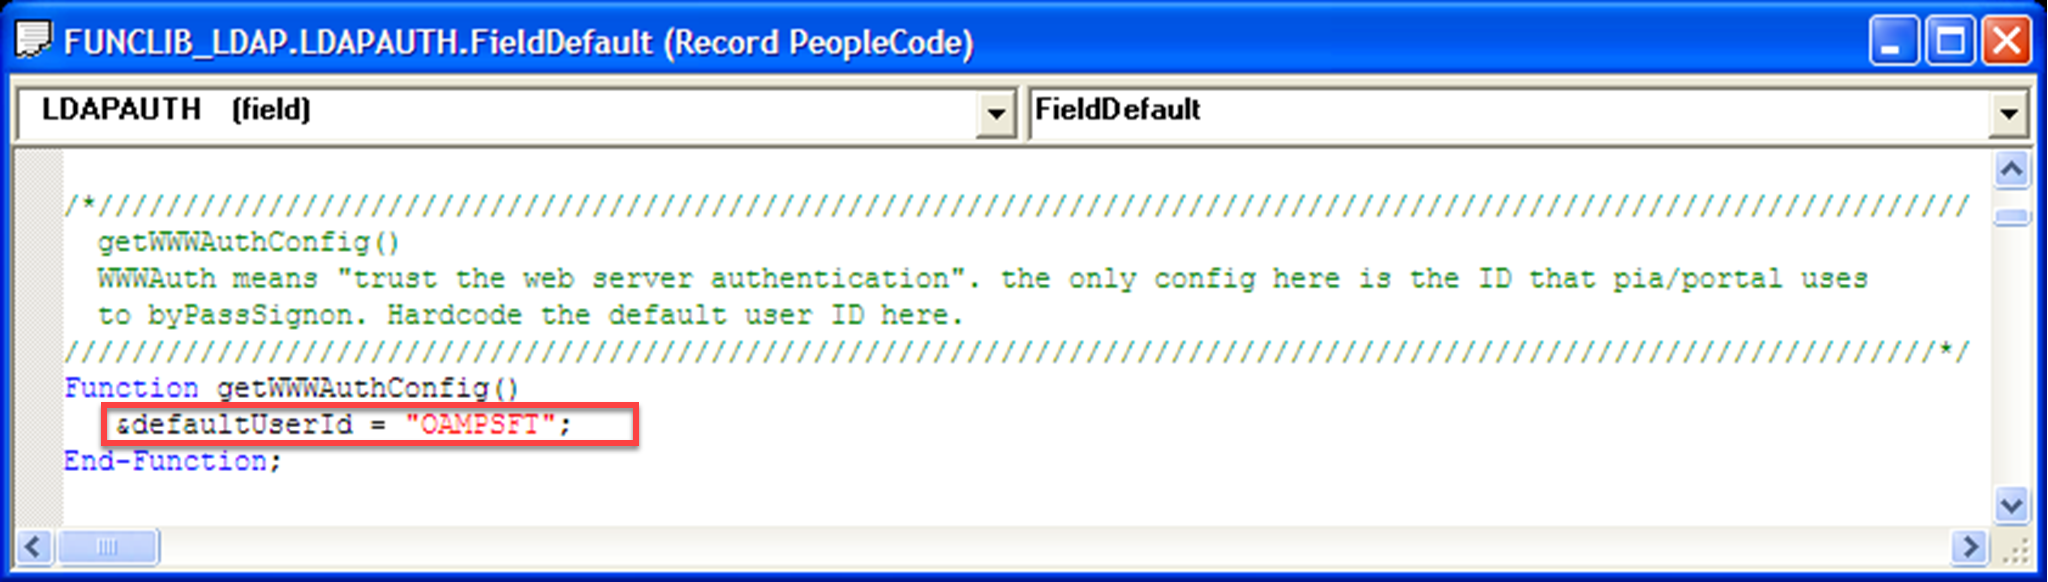 Screenshot of default User ID value equals OAMPSFT under Function.